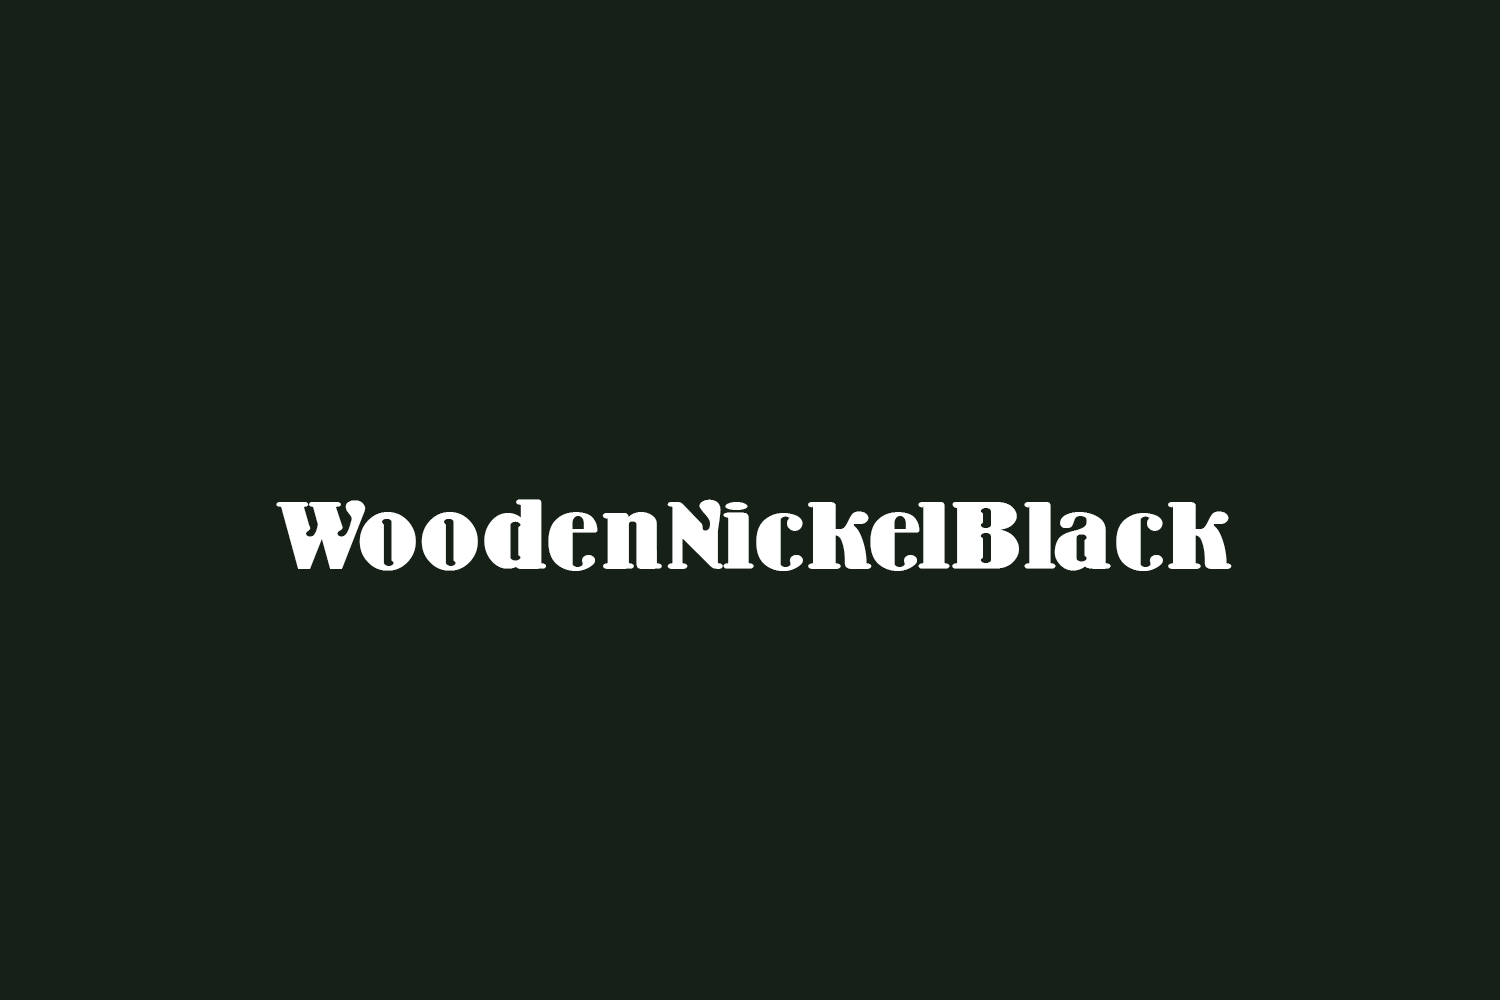 WoodenNickelBlack